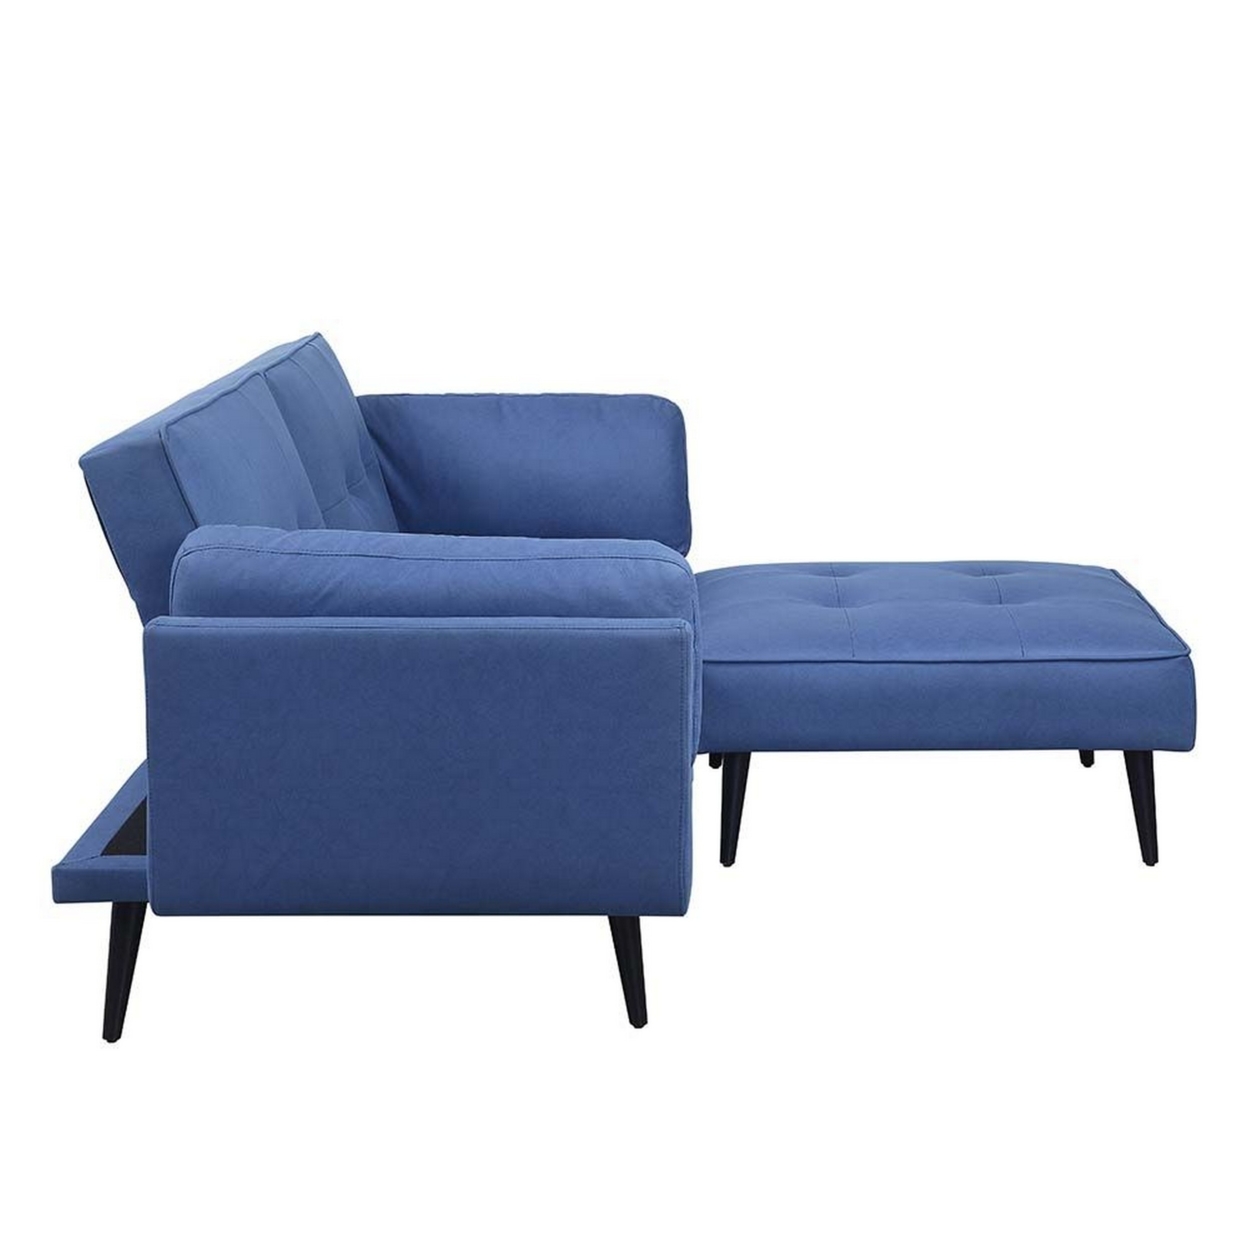 81 Inch Adjustable Sofa And Ottoman Set, Blue Fabric, Buttonless Tufting- Saltoro Sherpi